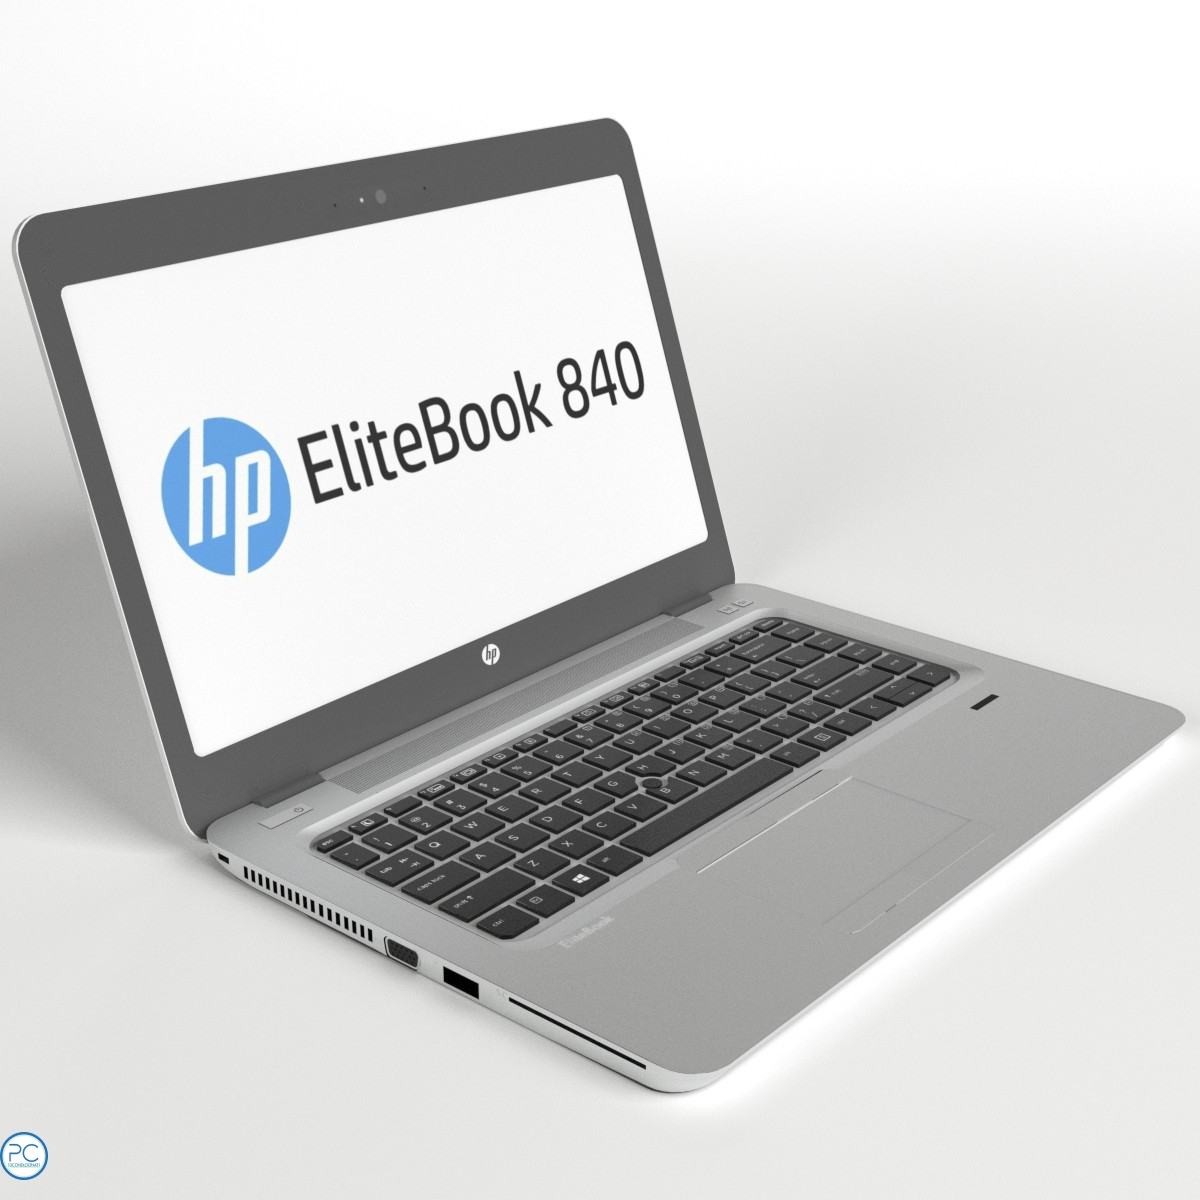 HP ELITEBOOK 840 G3 - esilab.it